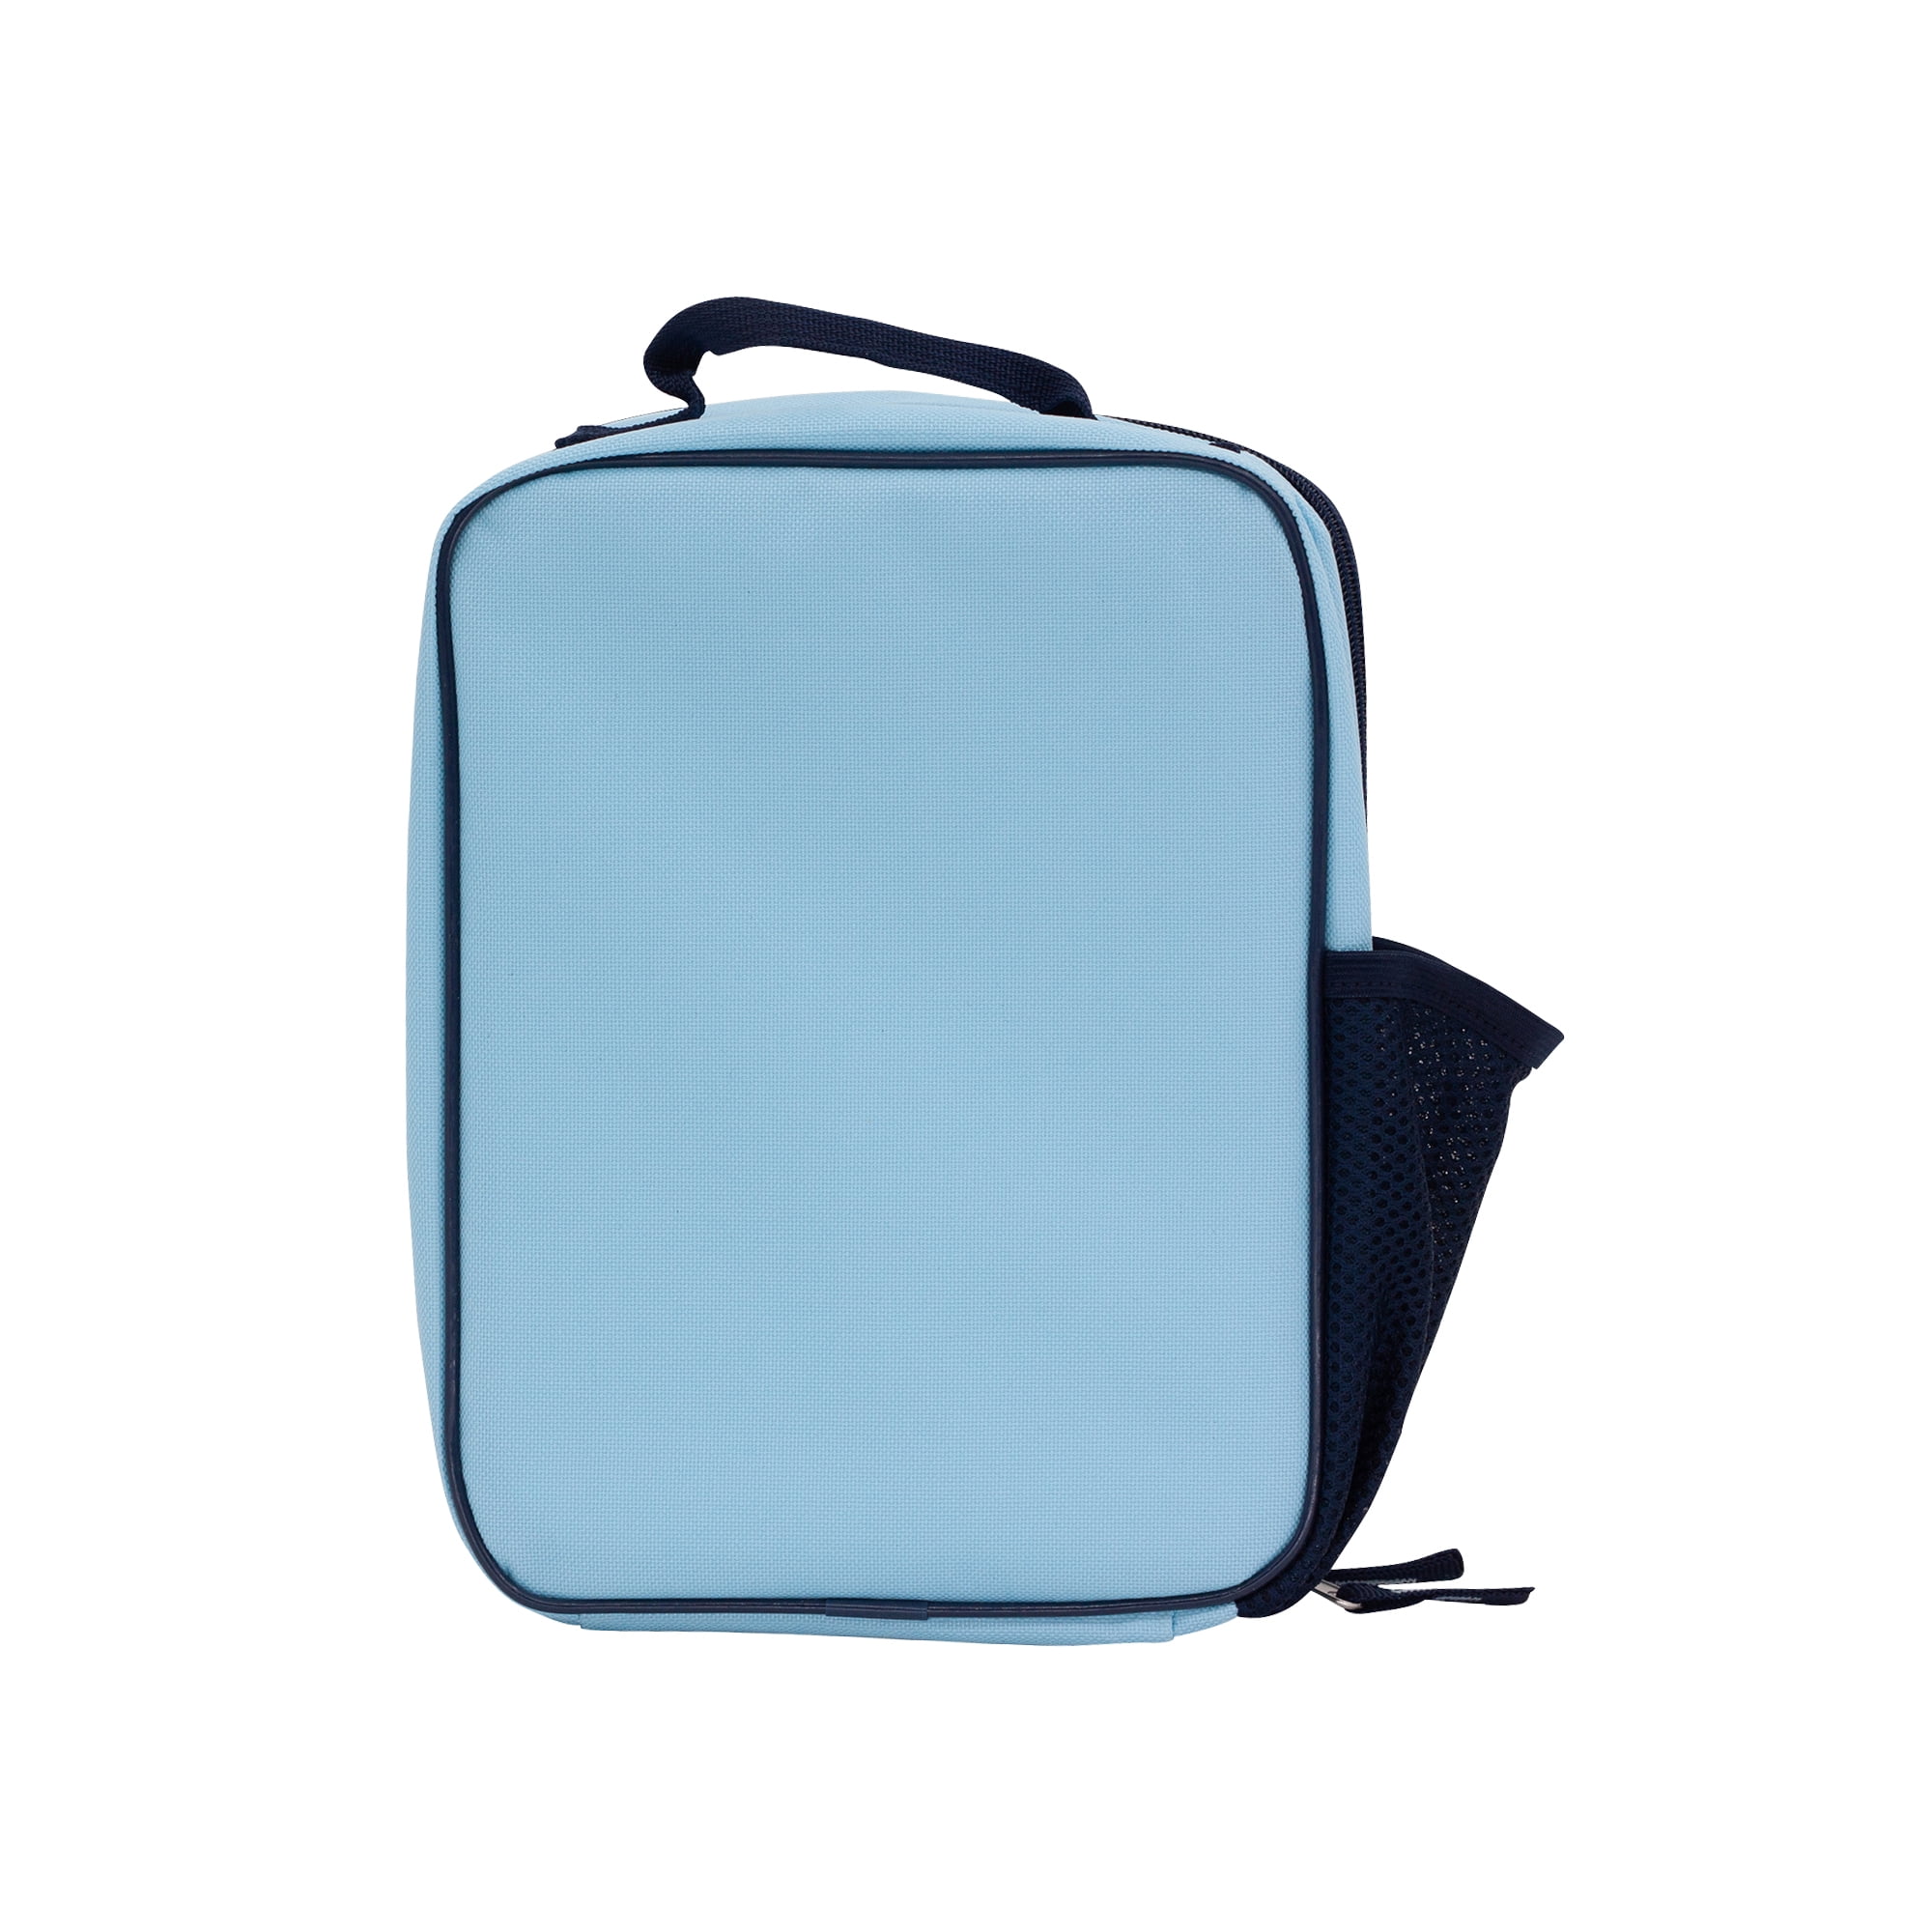 Bluey x b.box flexi insulated lunch bag – b.box for kids